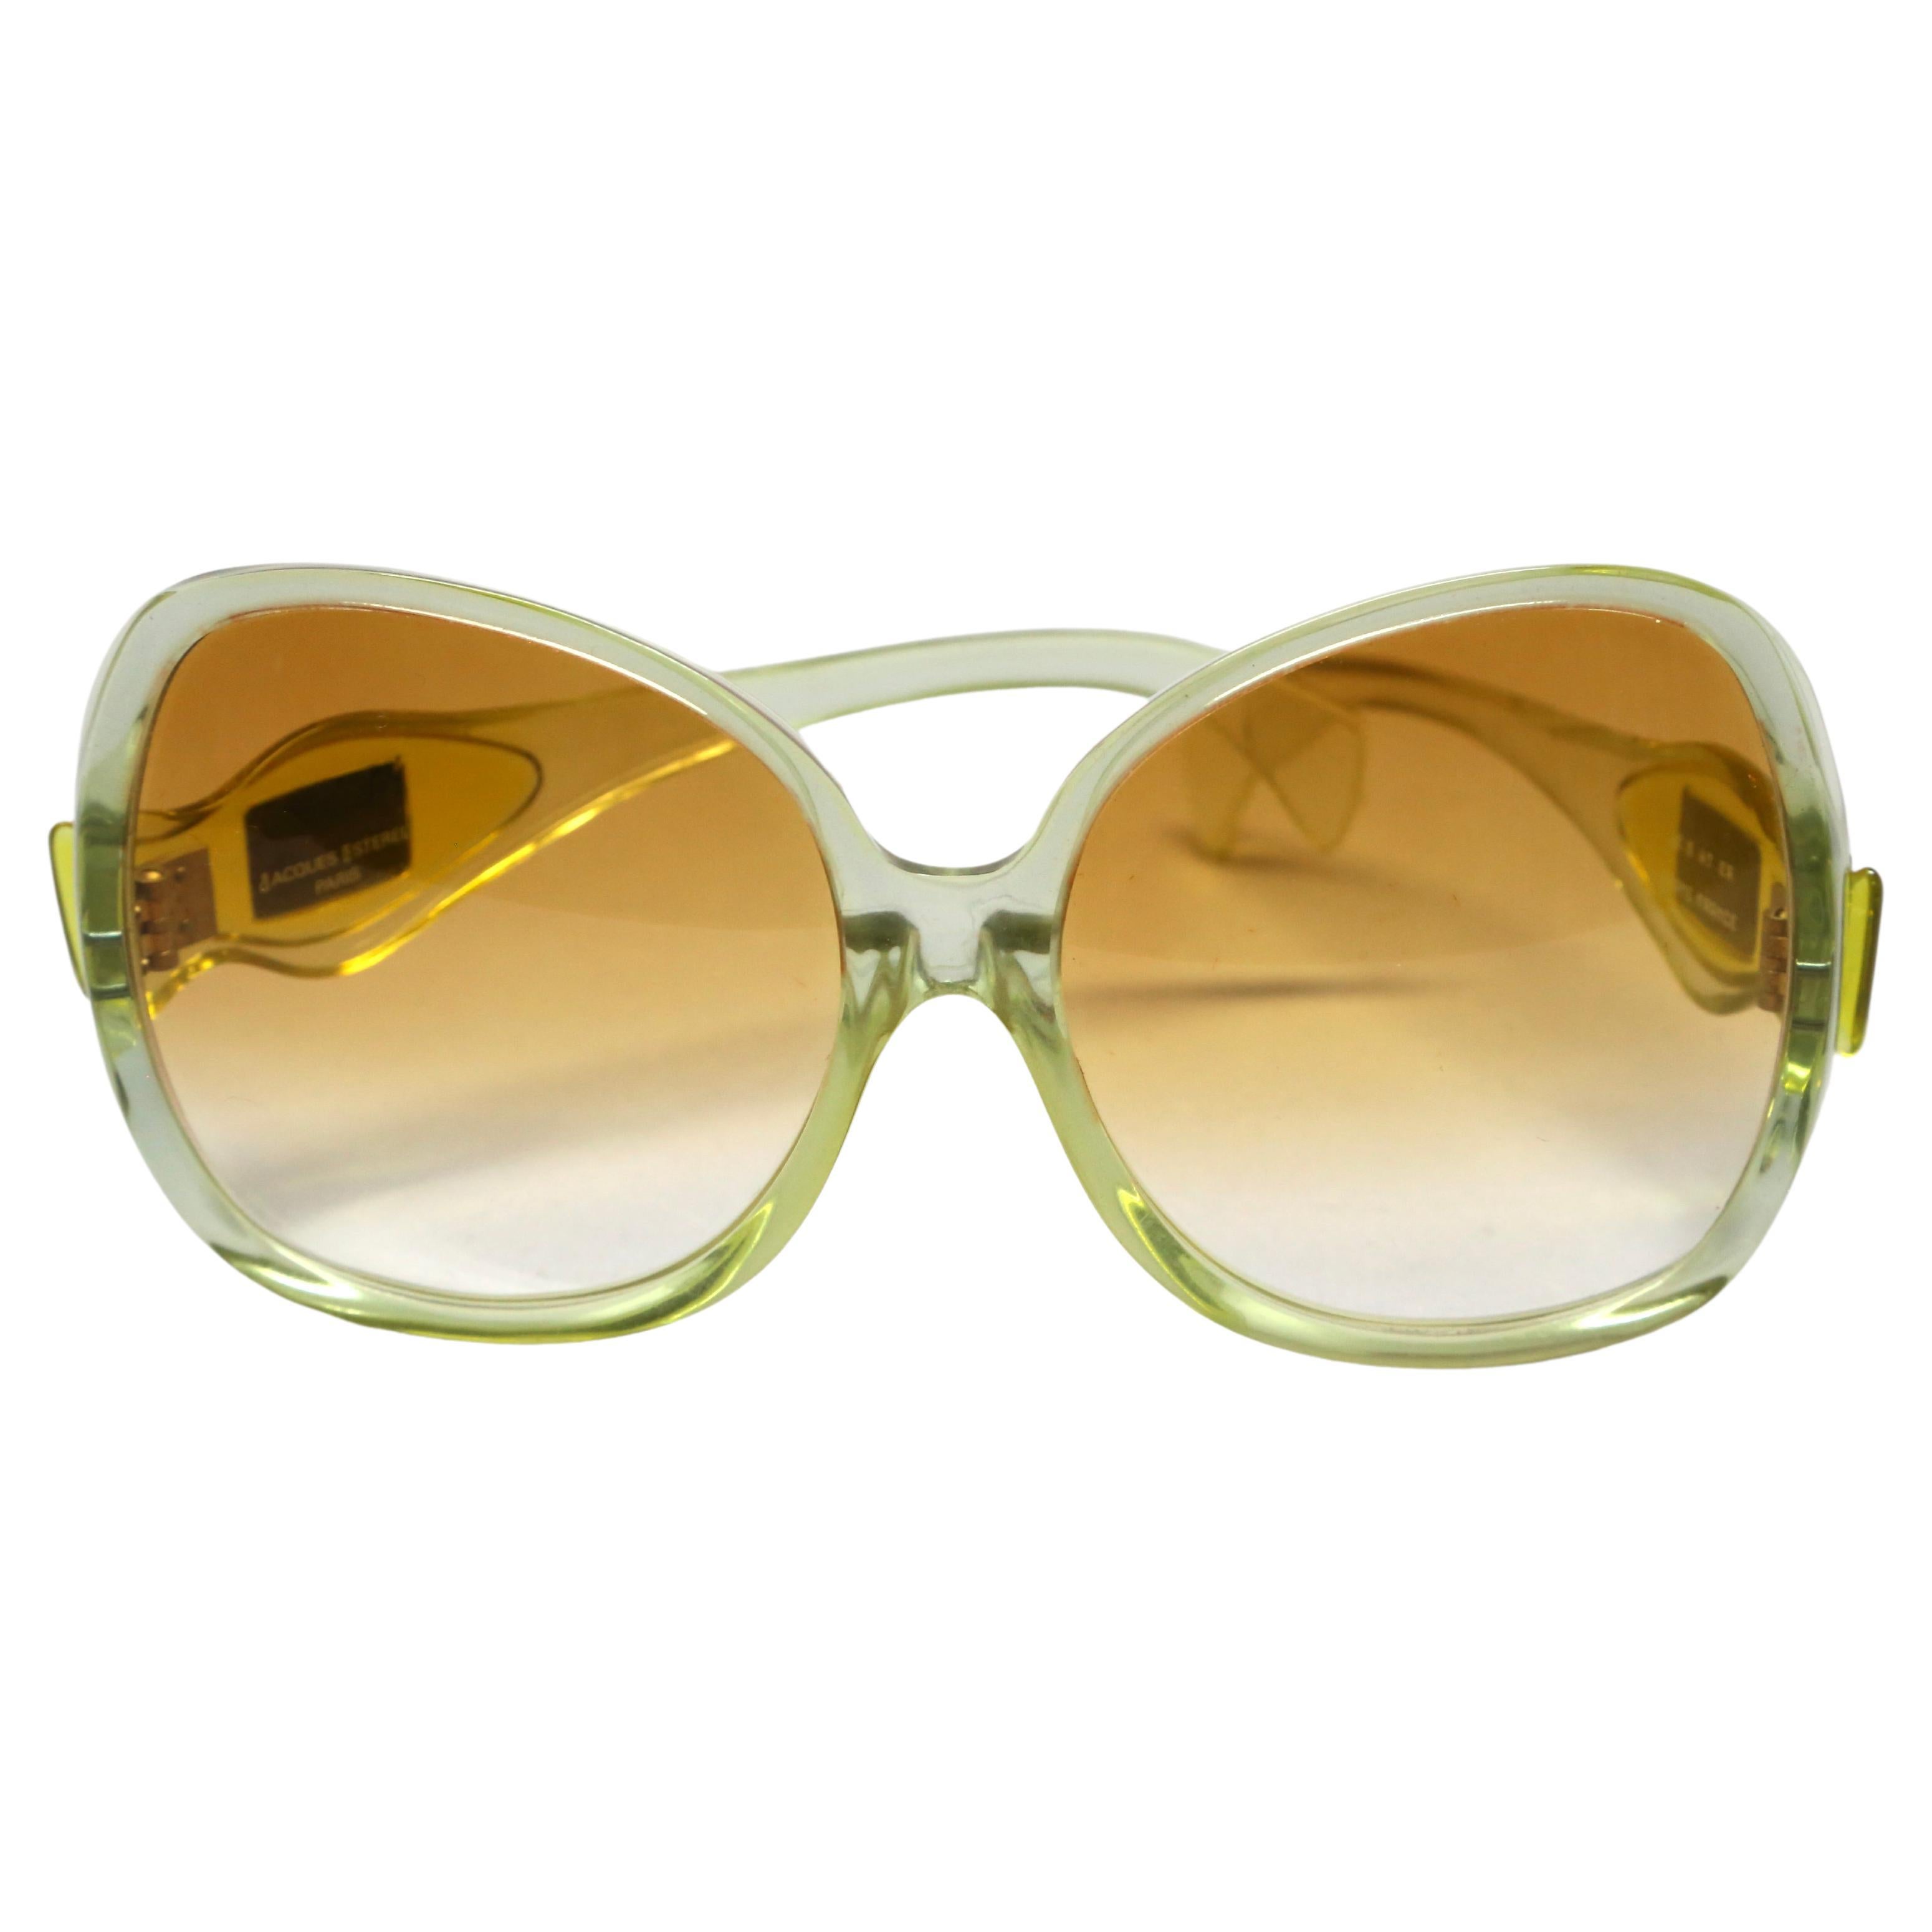 new 1970's JACQUES ESTEREL oversized yellow transparent sunglasses